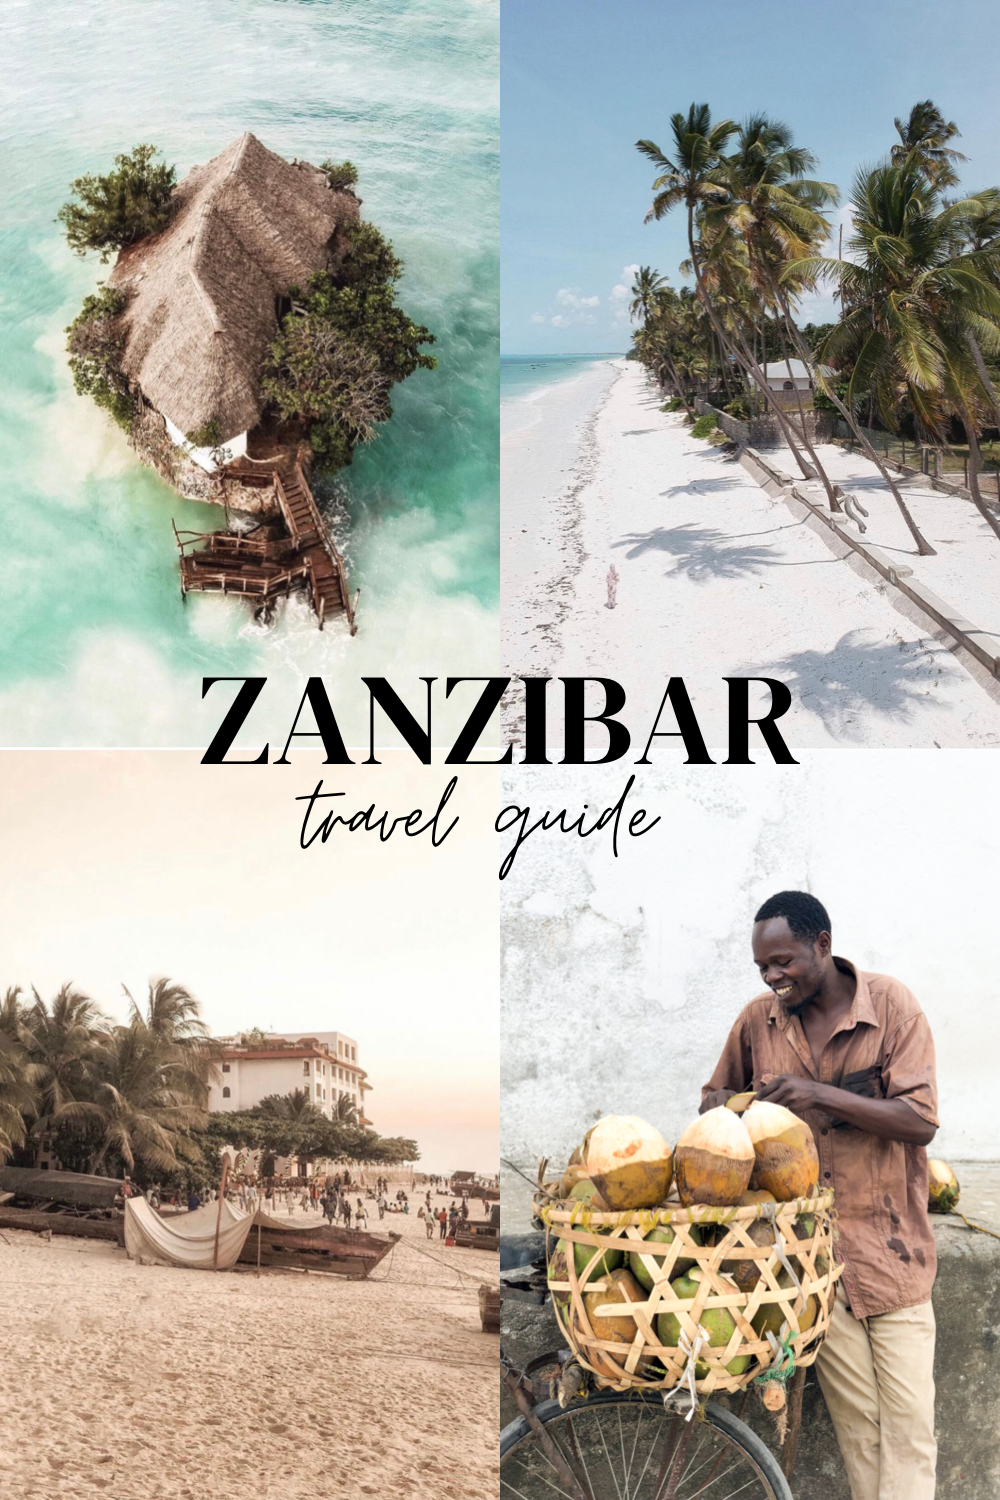 The ultimate Zanzibar travel guide: best places to see, visit and eat in Zanzibar and best beaches in Zanzibar